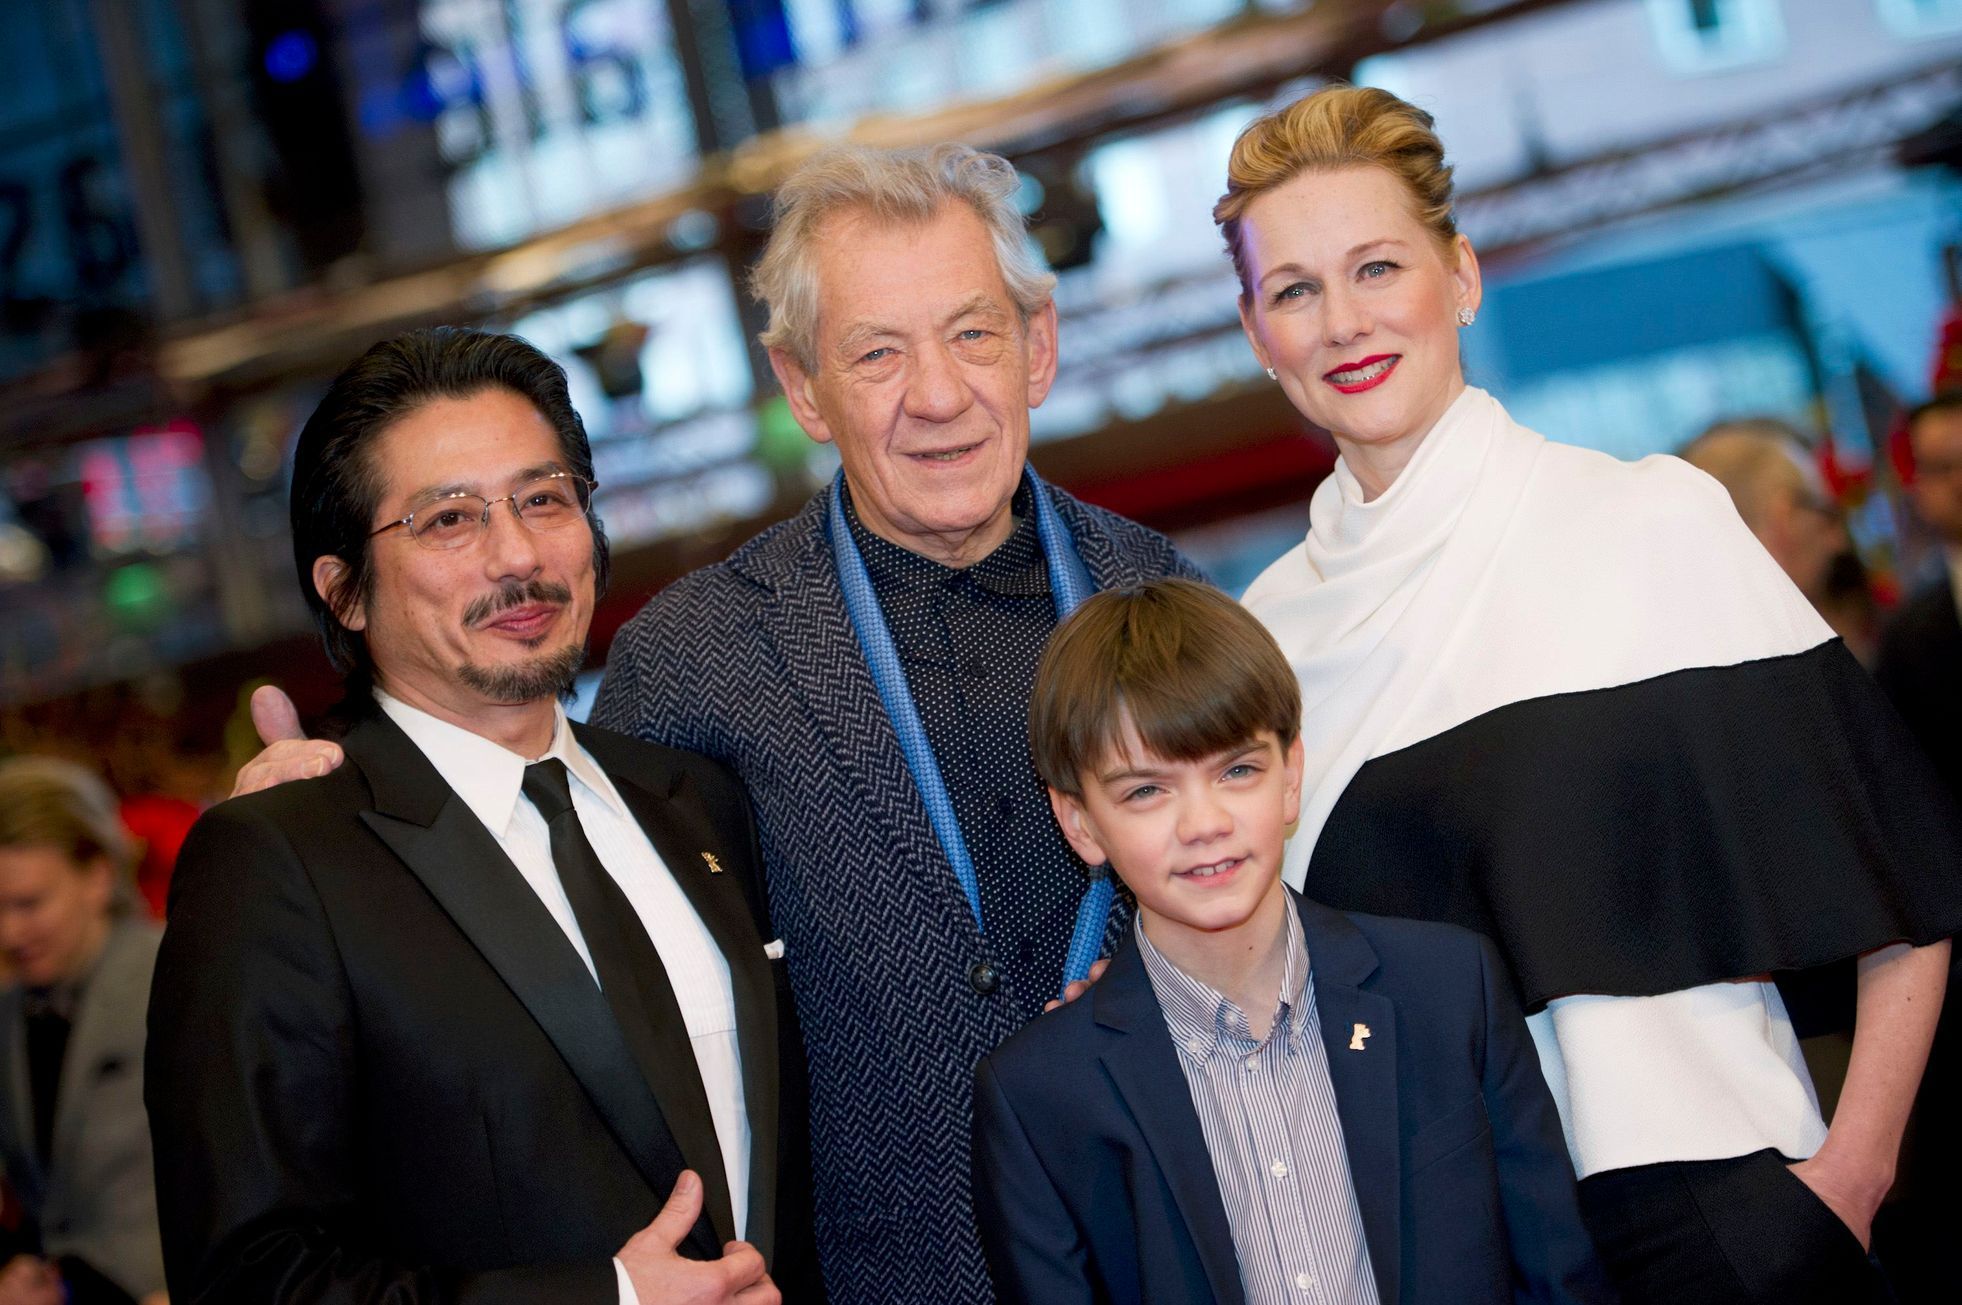 Actors Sanada McKellen Parker and Linney arrive for screening at 65th Berlinale International Film Festival in Berlin